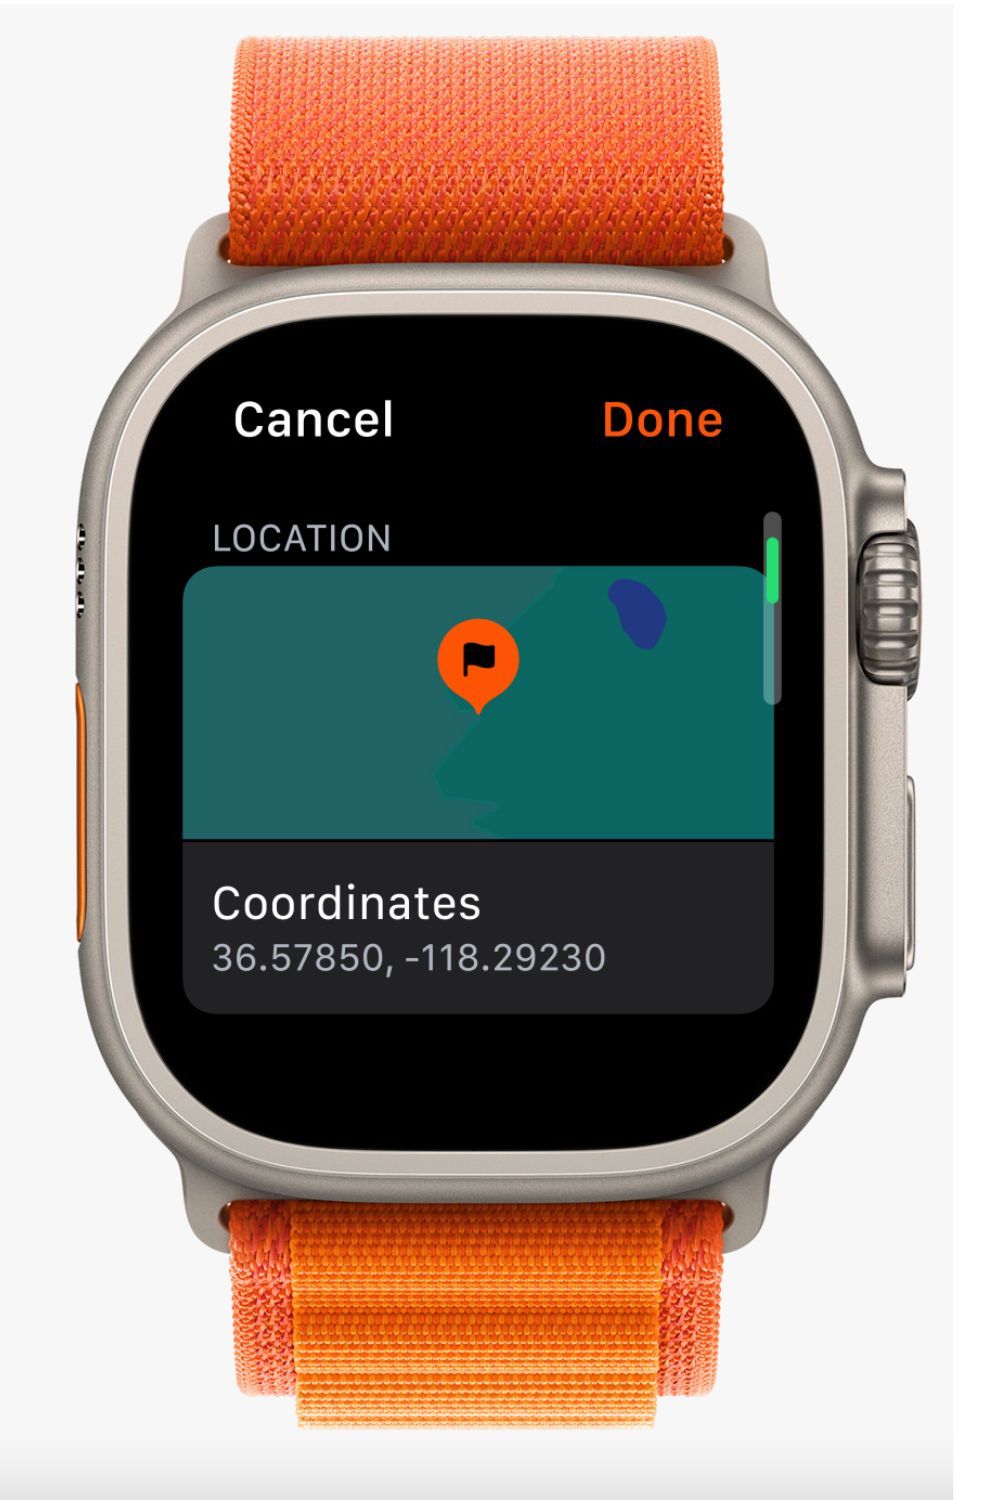 Apple Watch Ultra with orange wristband